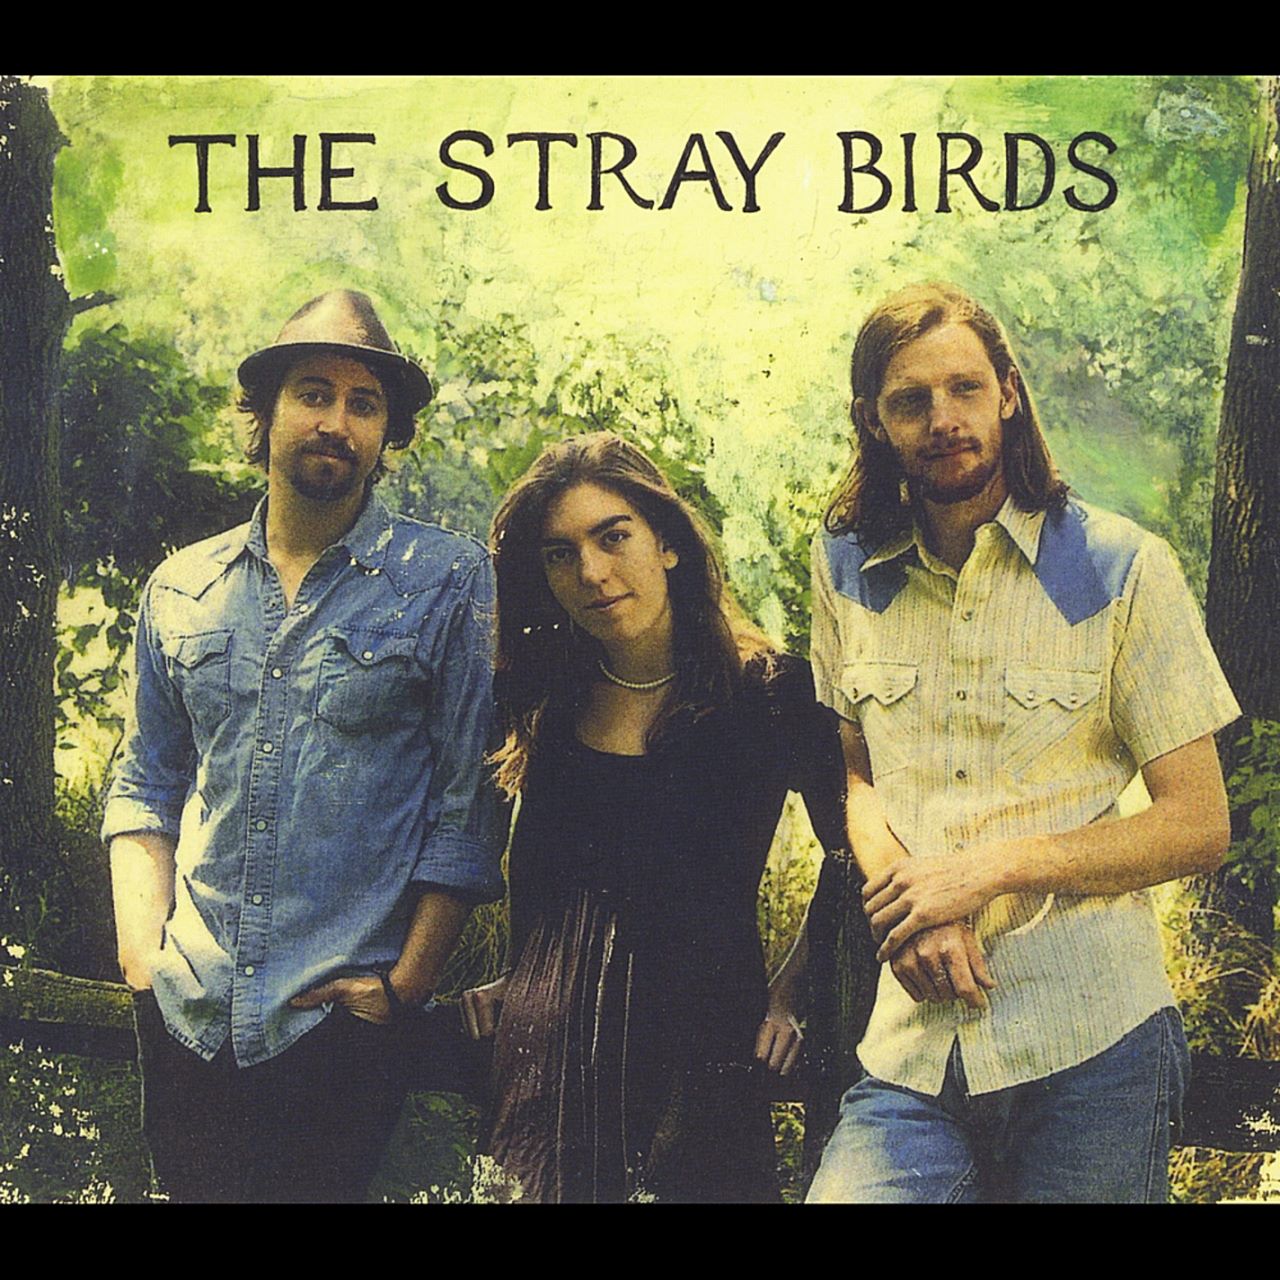 Stray Birds - The Stray Birds cover album